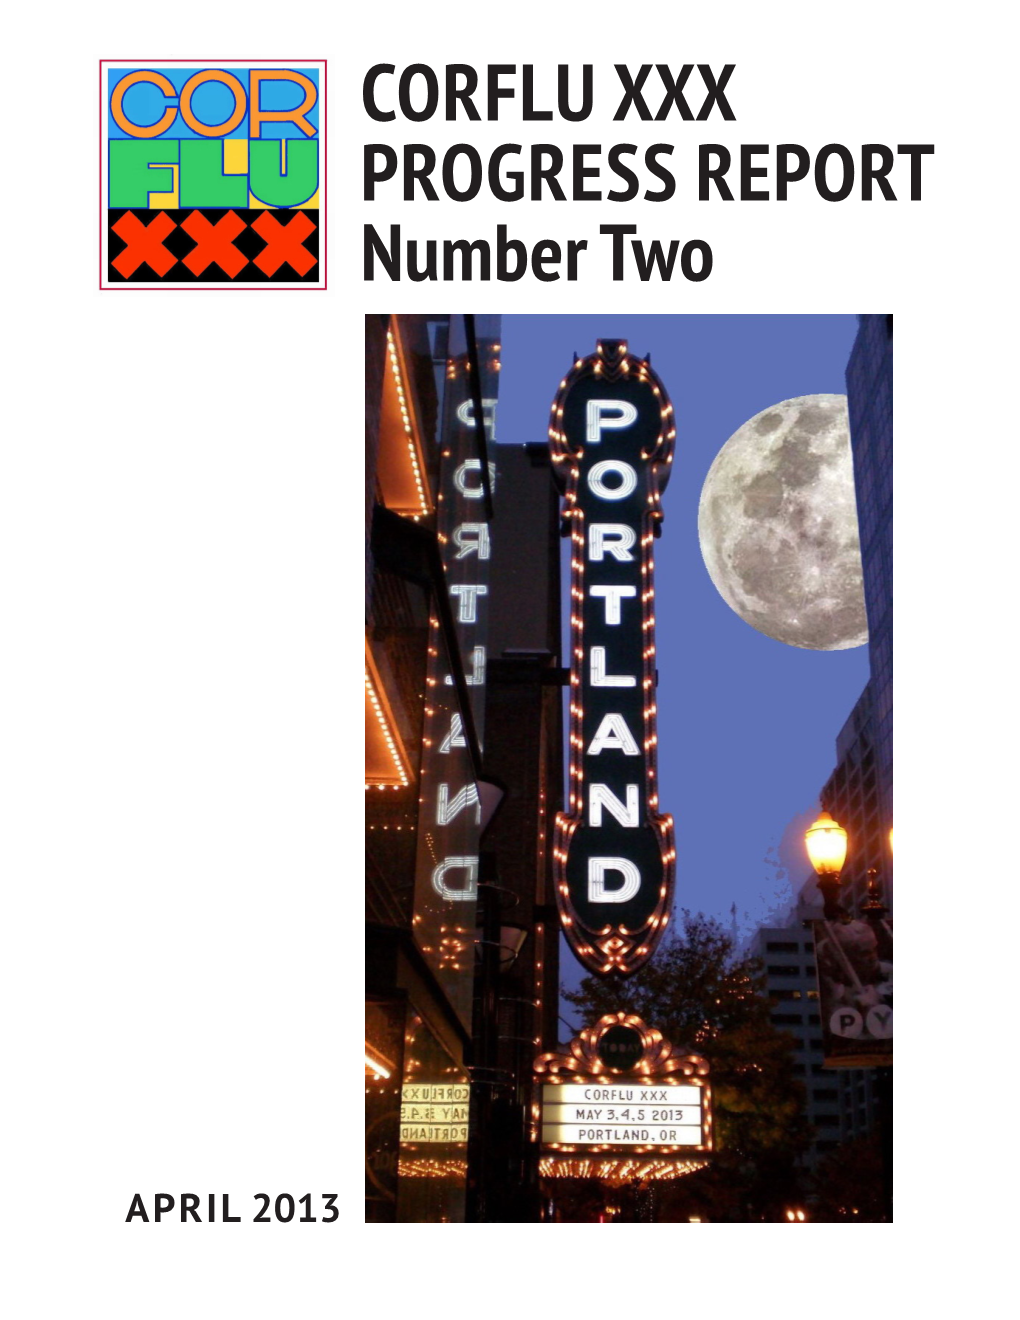 CORFLU XXX PROGRESS REPORT Number Two